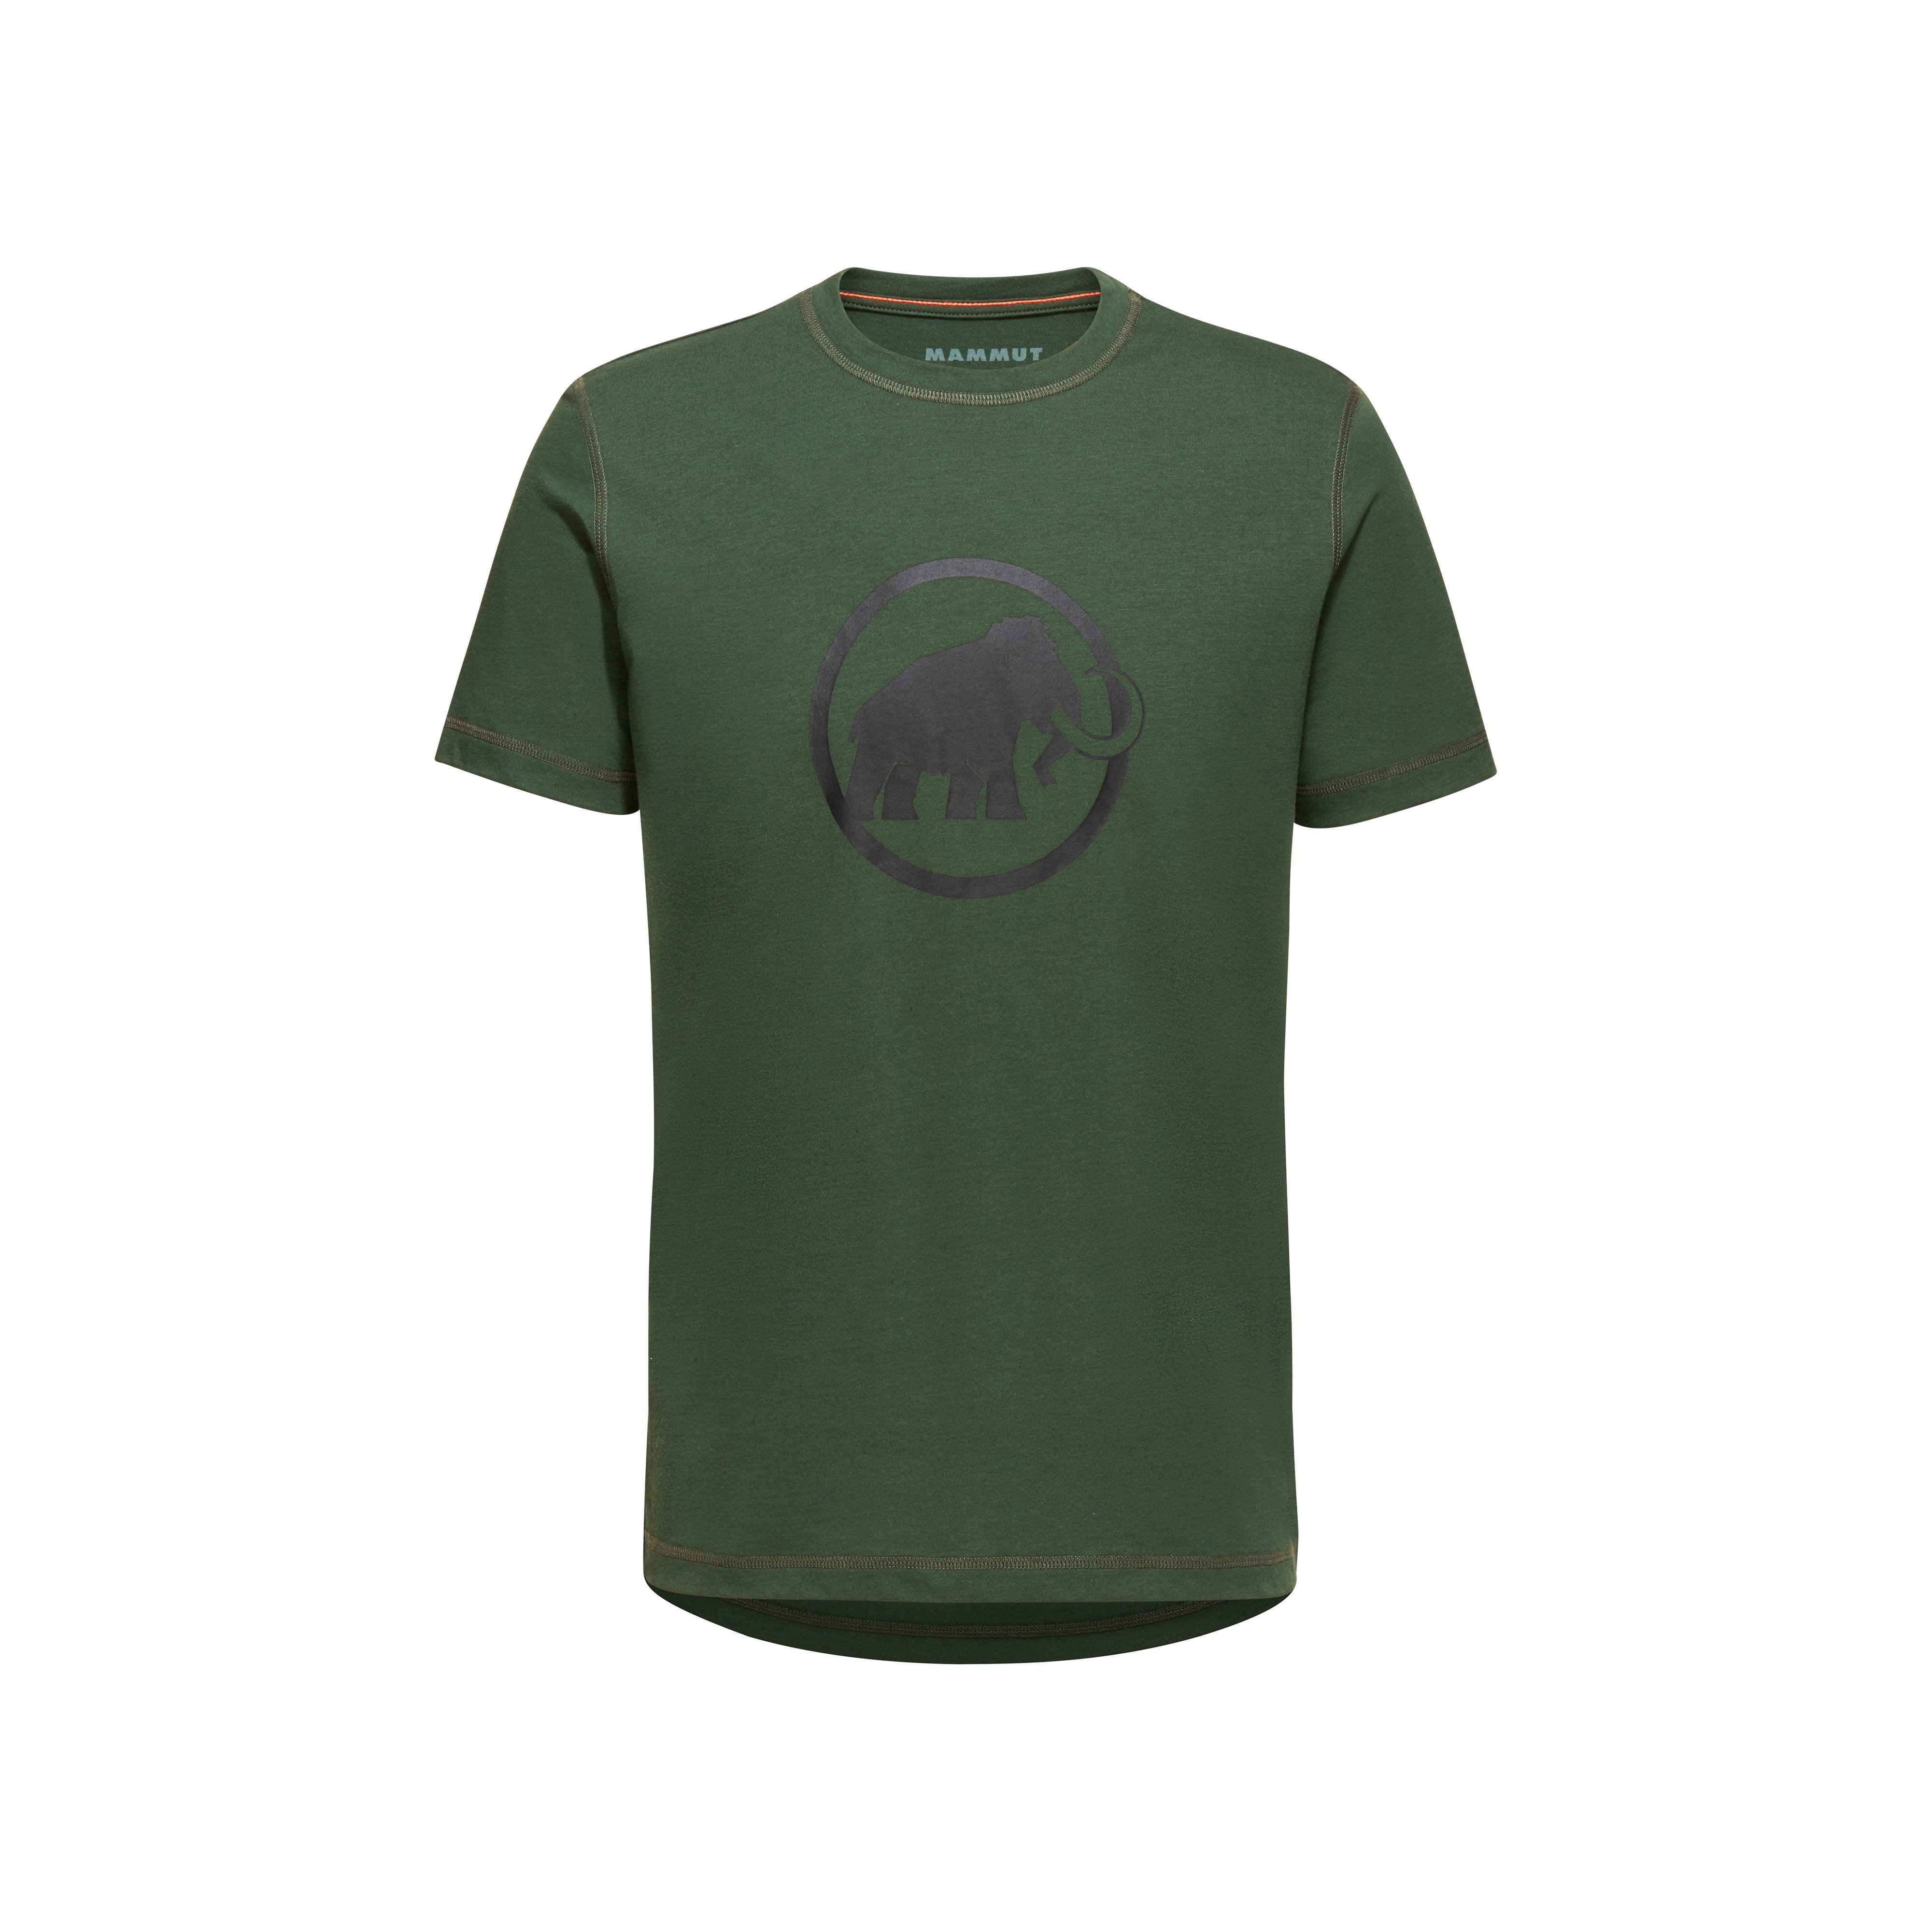 Mammut Core T-Shirt Men Classic - woods, S product image